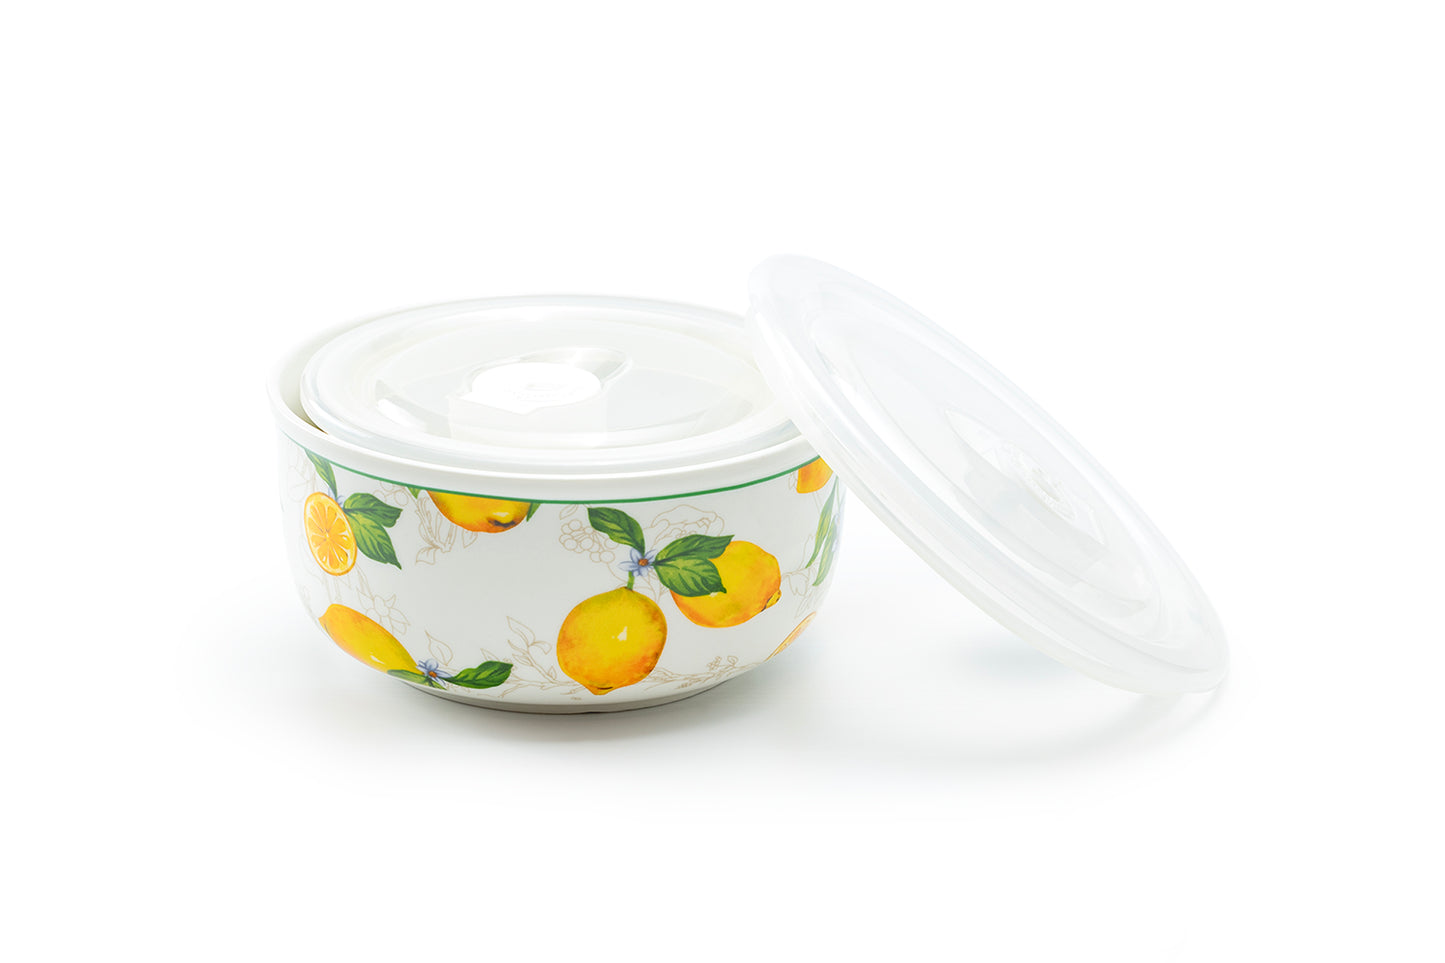 Lemon Garden Storage Bowls with Vented Lids Set of 2